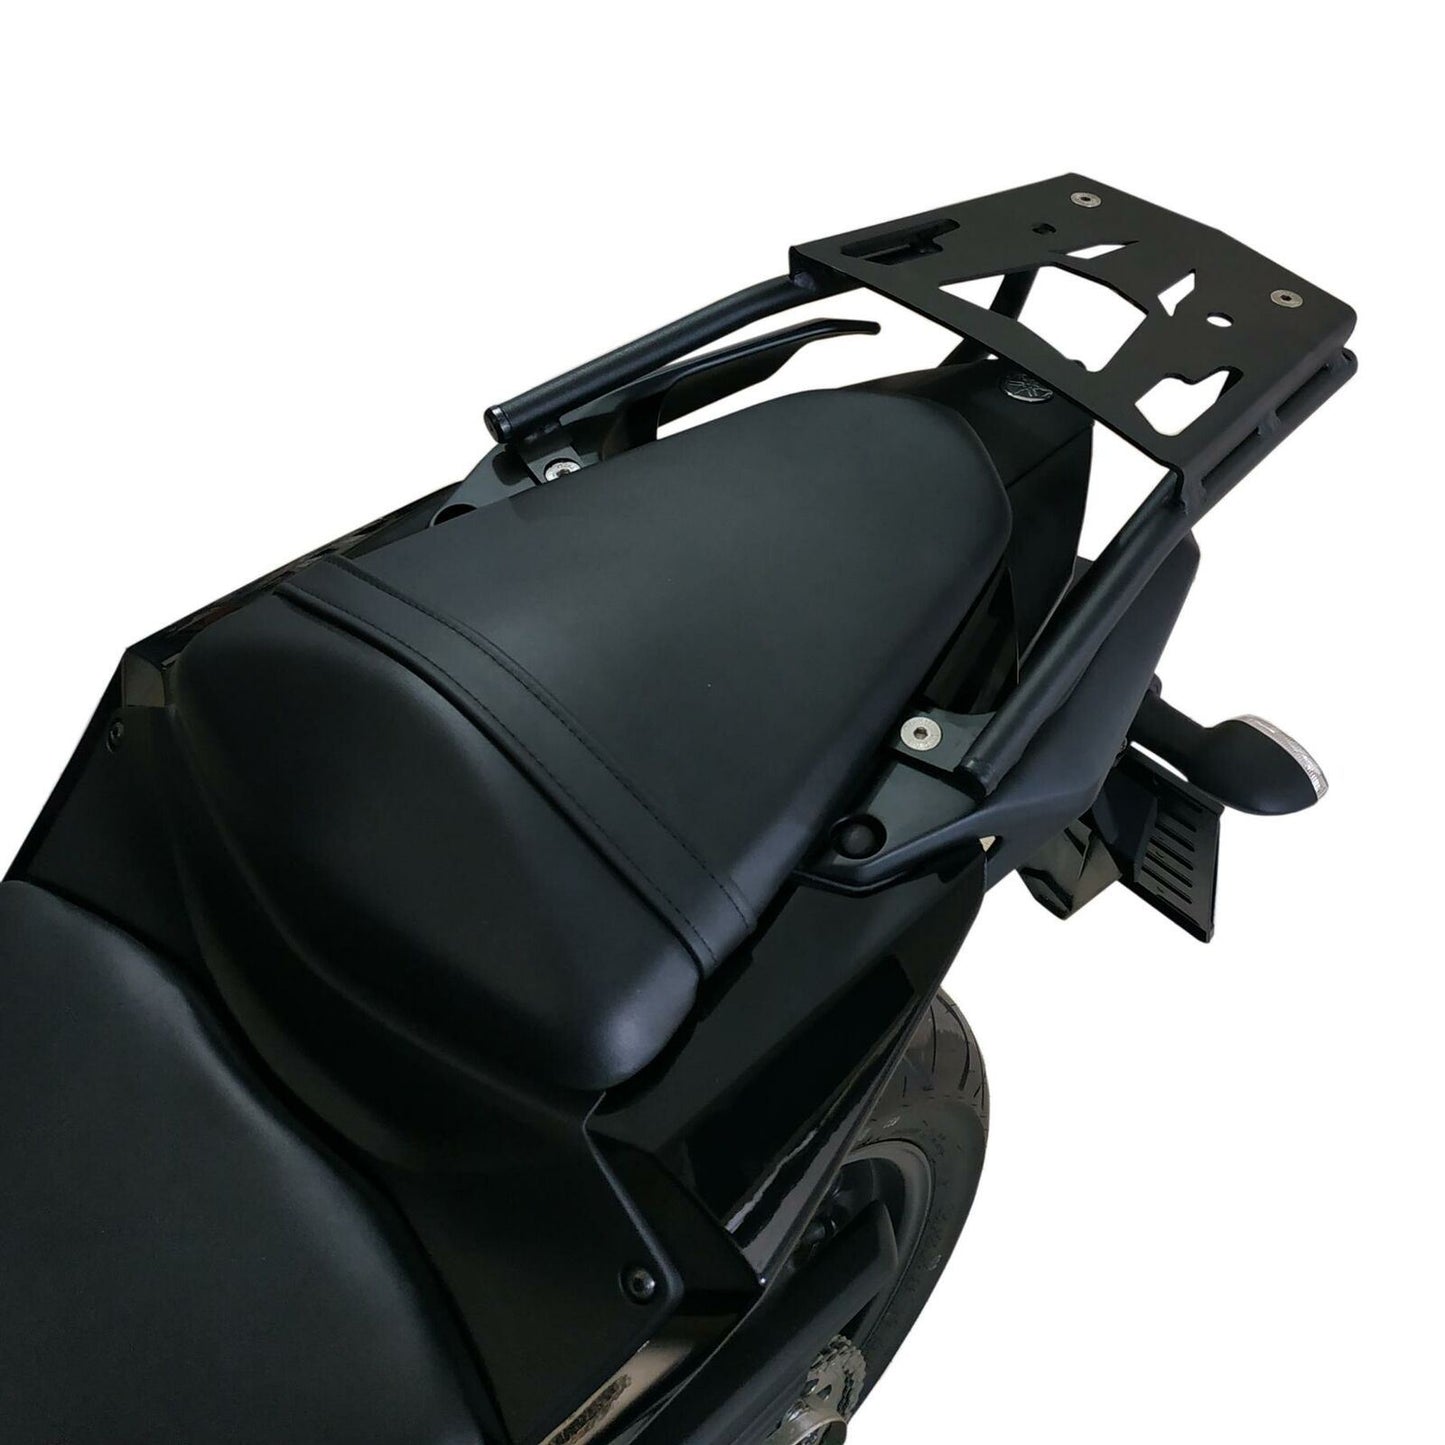 Yamaha MT03 MT25 rear rack luggage carrier 2016-19